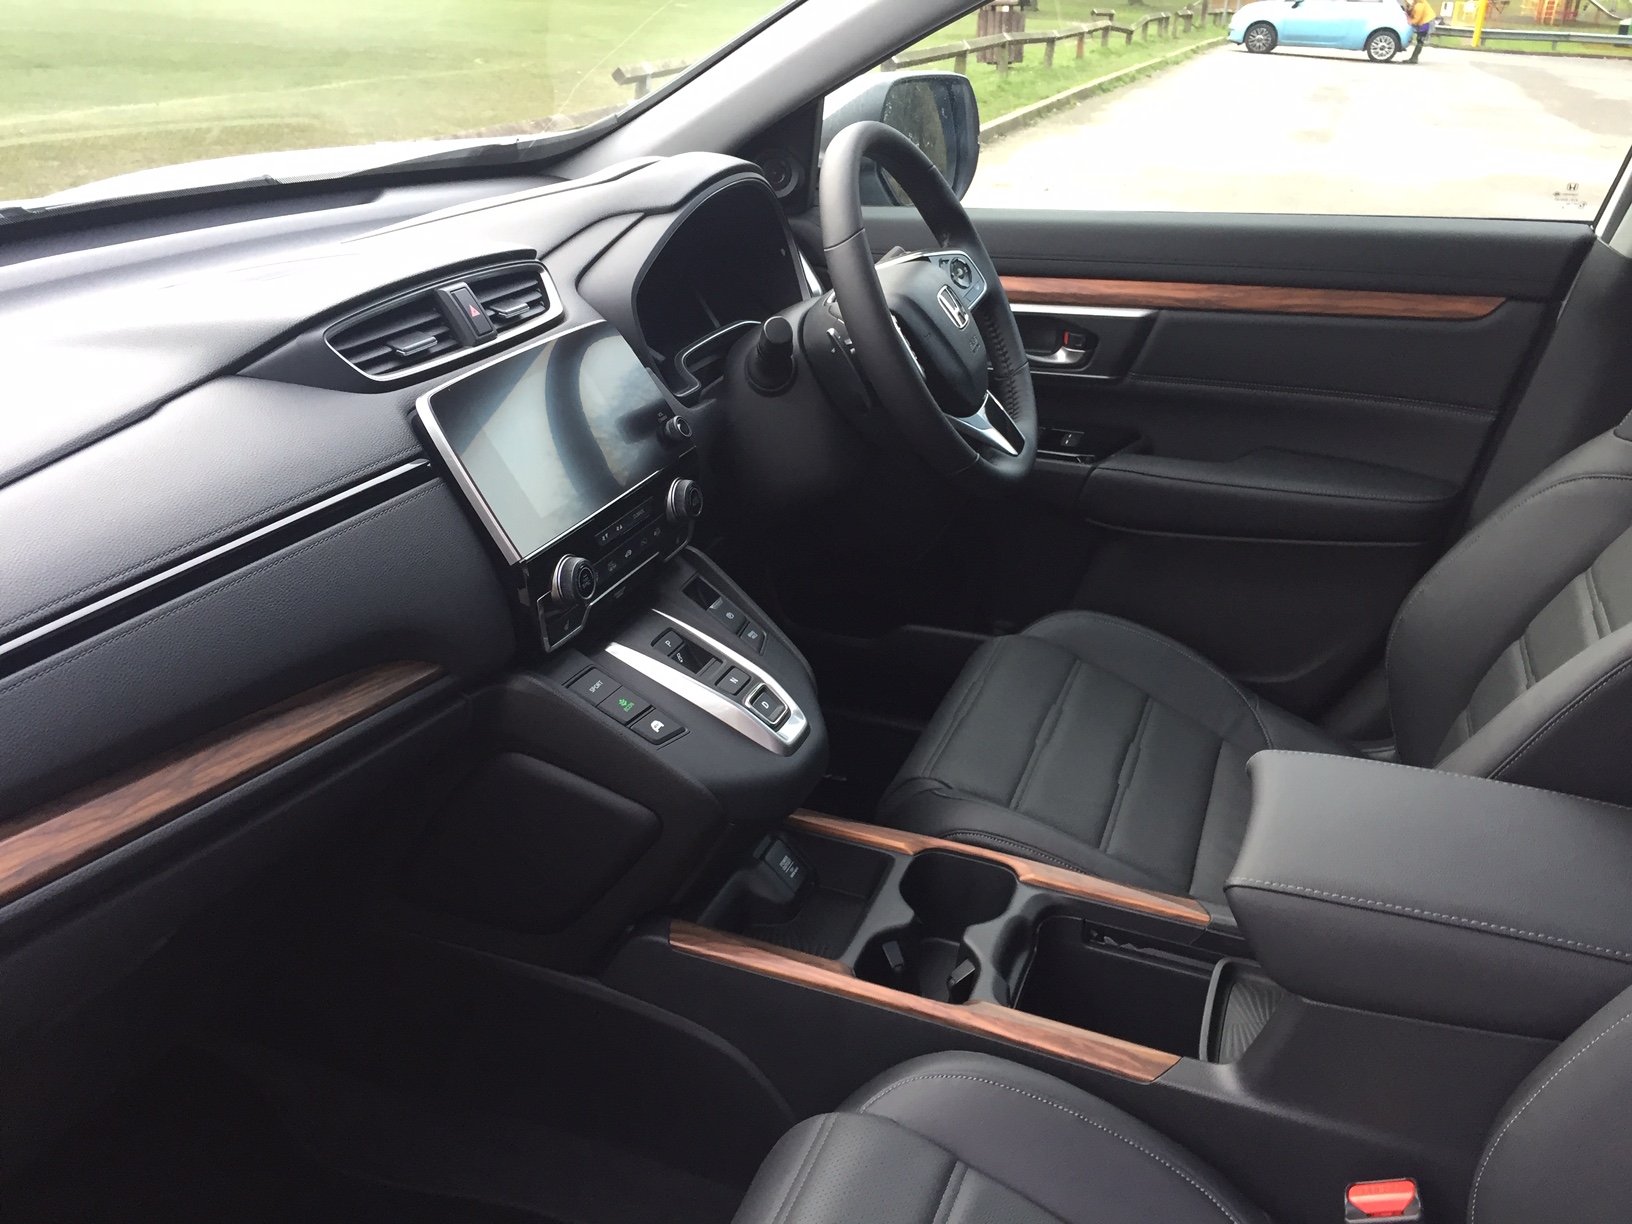 Honda CR-V Hybrid Interior Front View